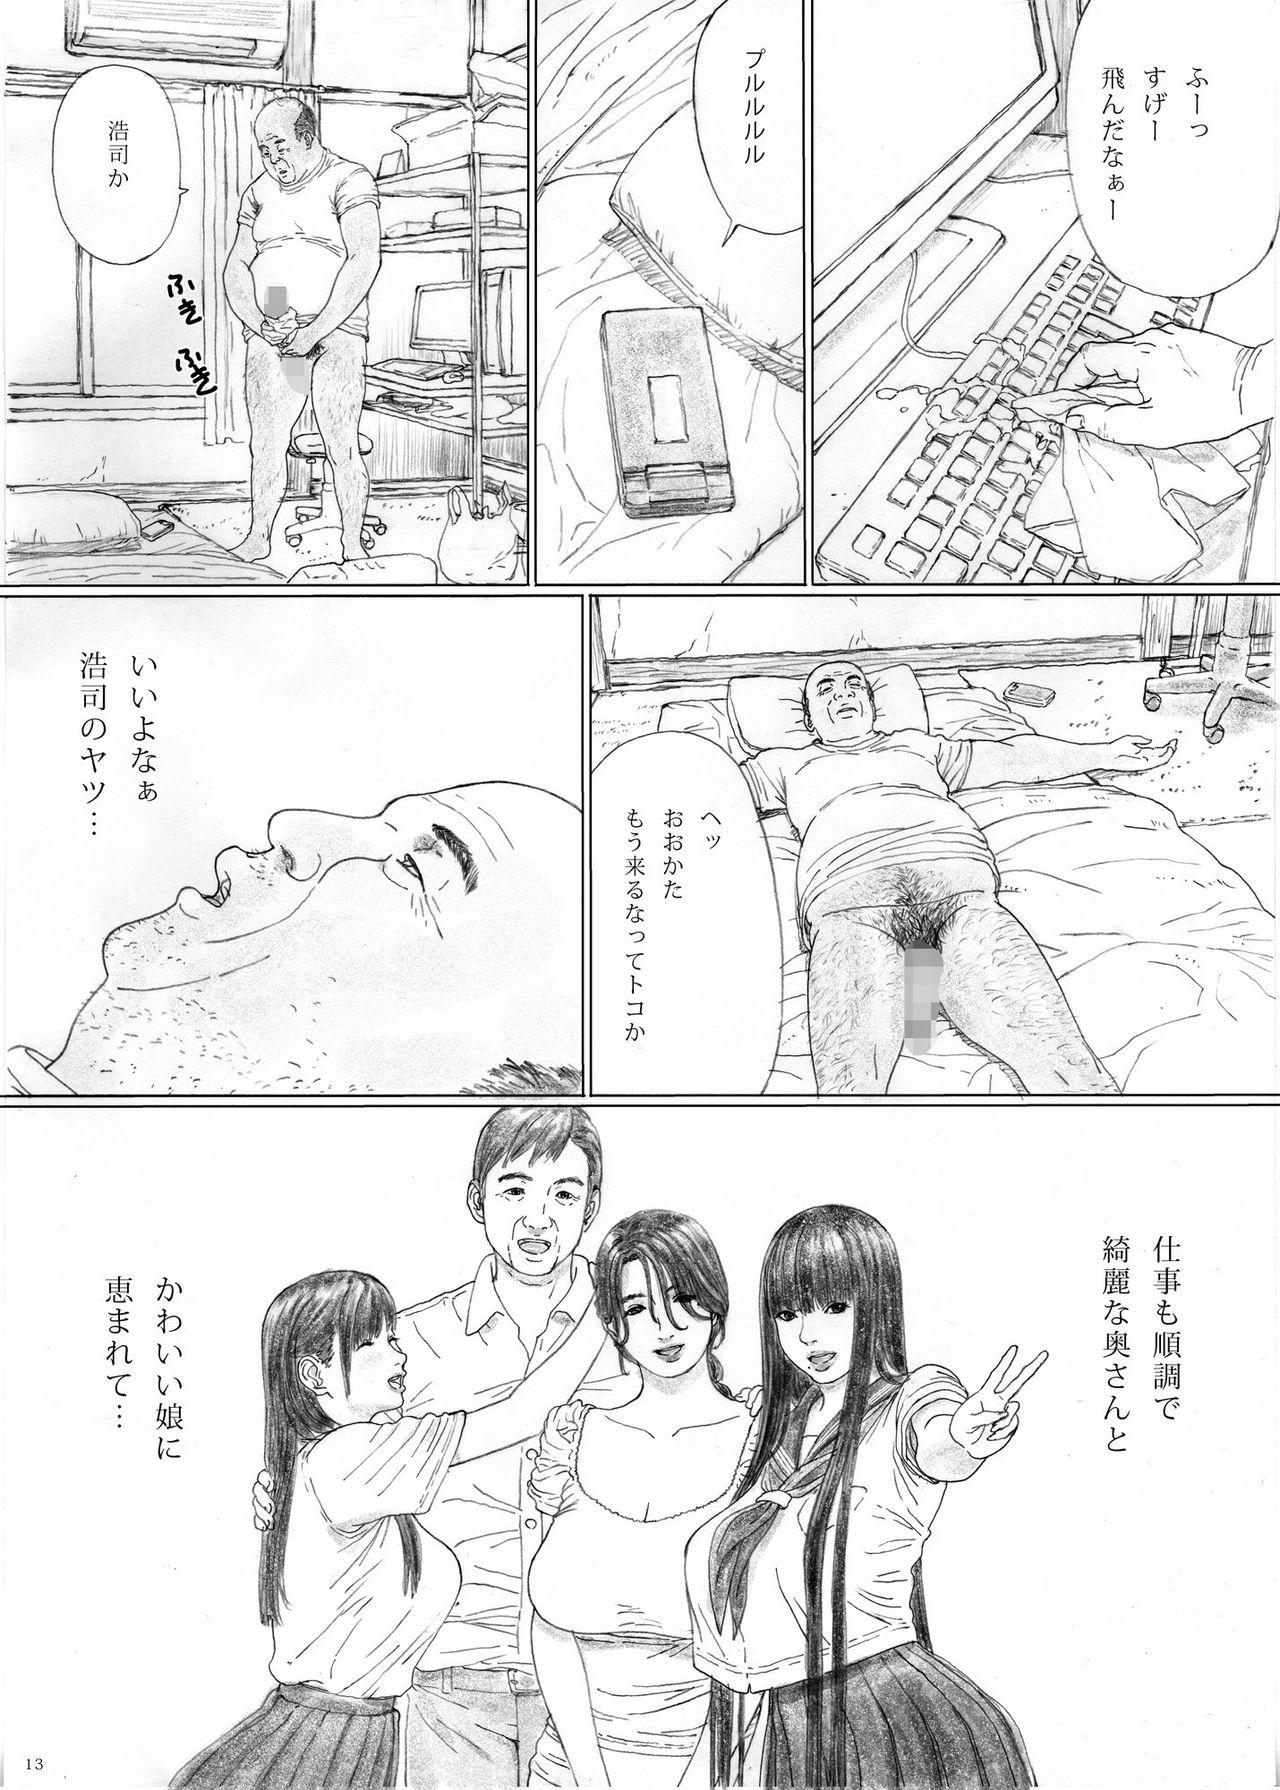 Sextoy Inyoku no Sumika 1 - Original Strip - Page 12